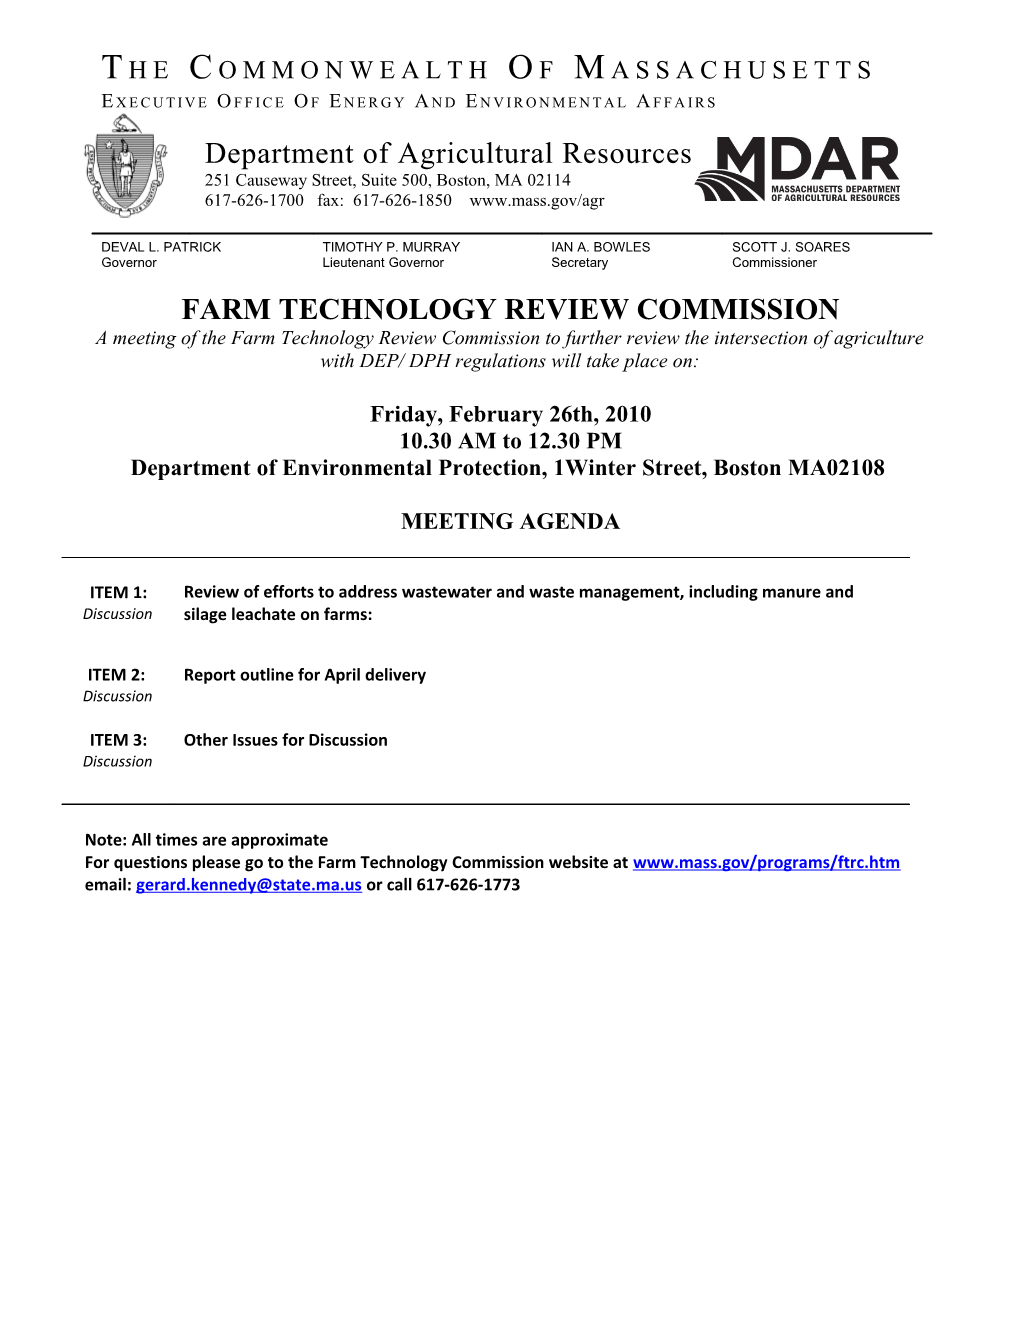 Farm Technology Review Commission